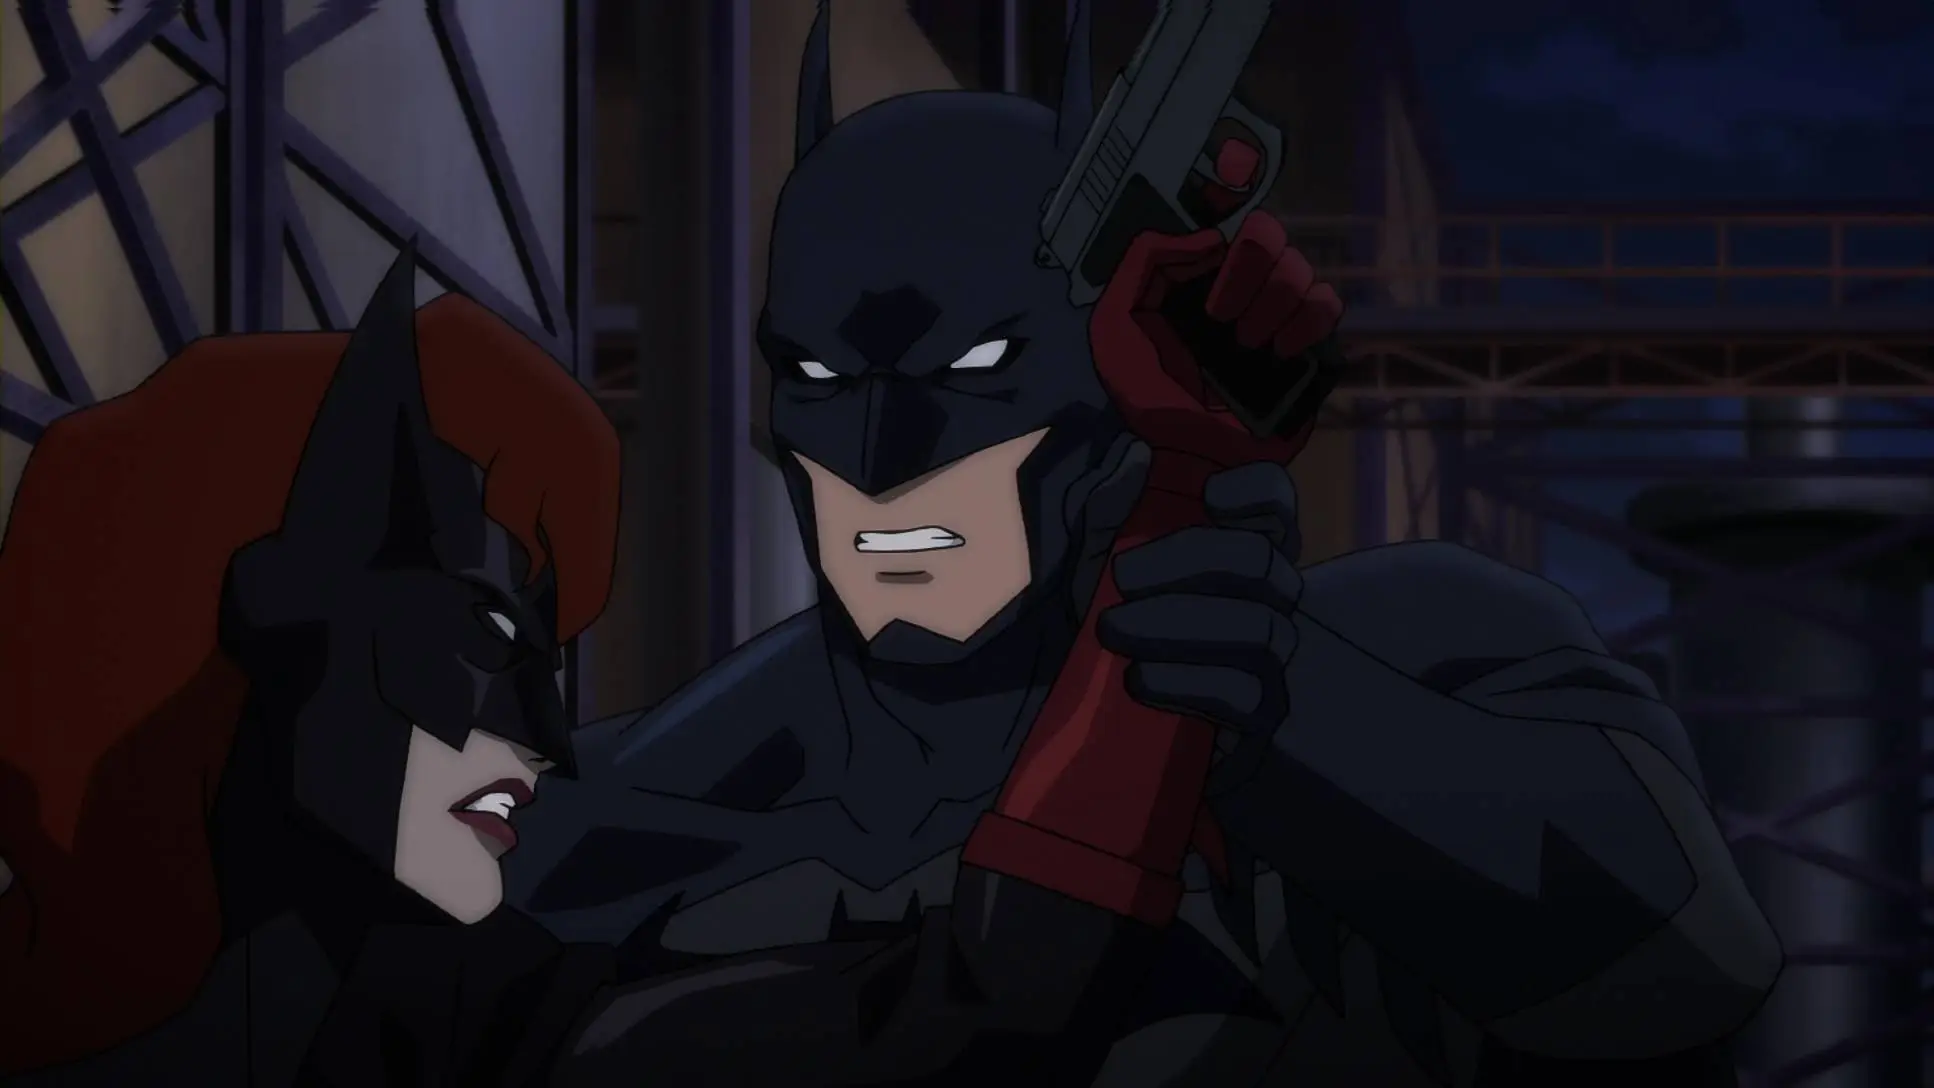 Batman batwoman. Бэтмен: дурная кровь (2016). Бэтмен дурная кровь Бэтвумен. Бэтгерл Бэтмен дурная кровь.